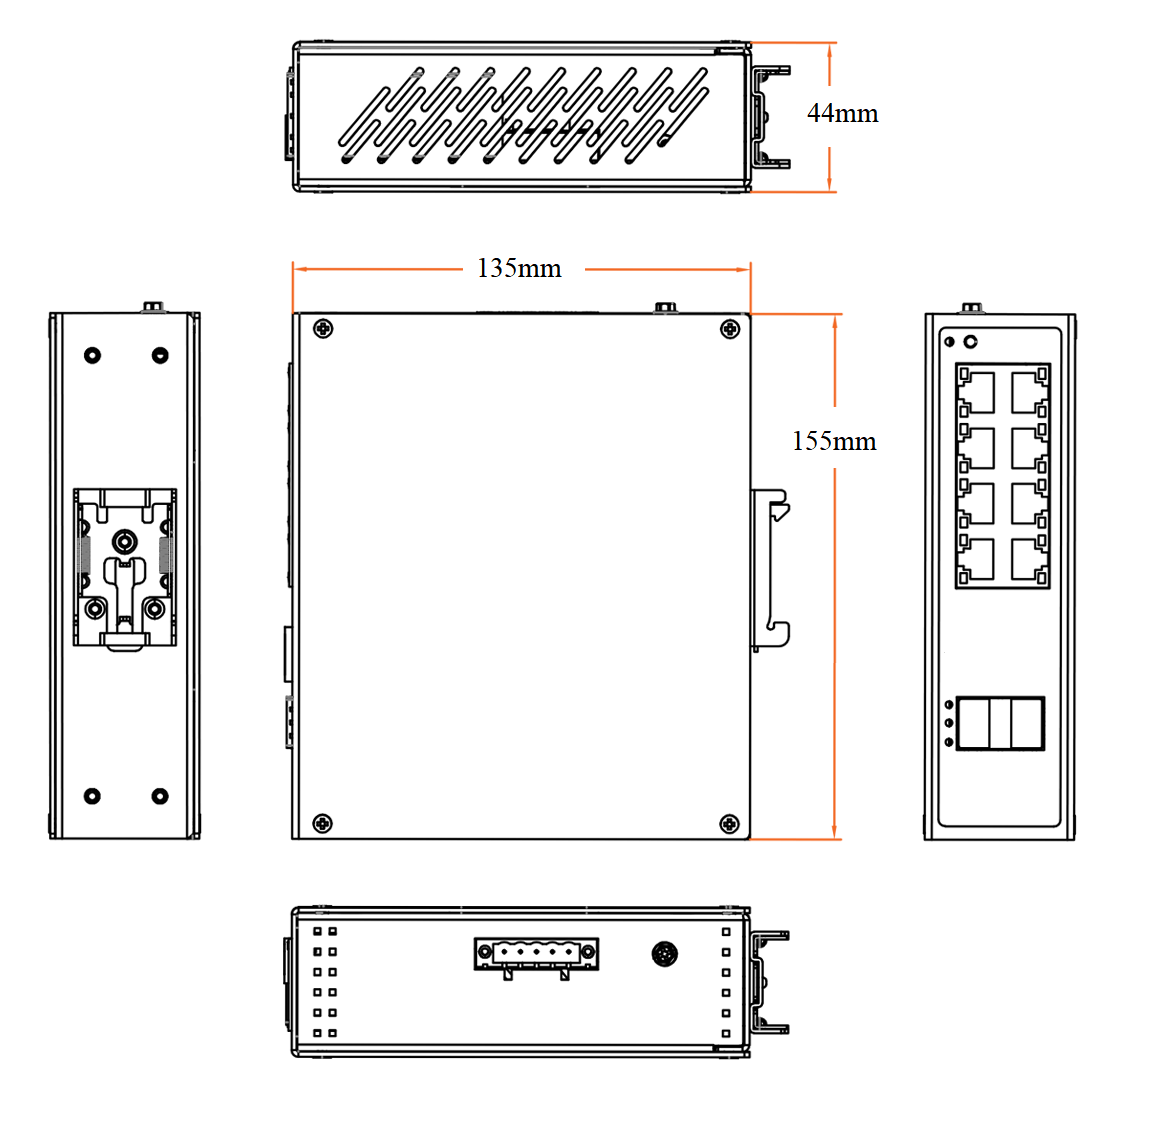 industrial Ethernet switch, industrial fiber switch, industrial switch gigabit